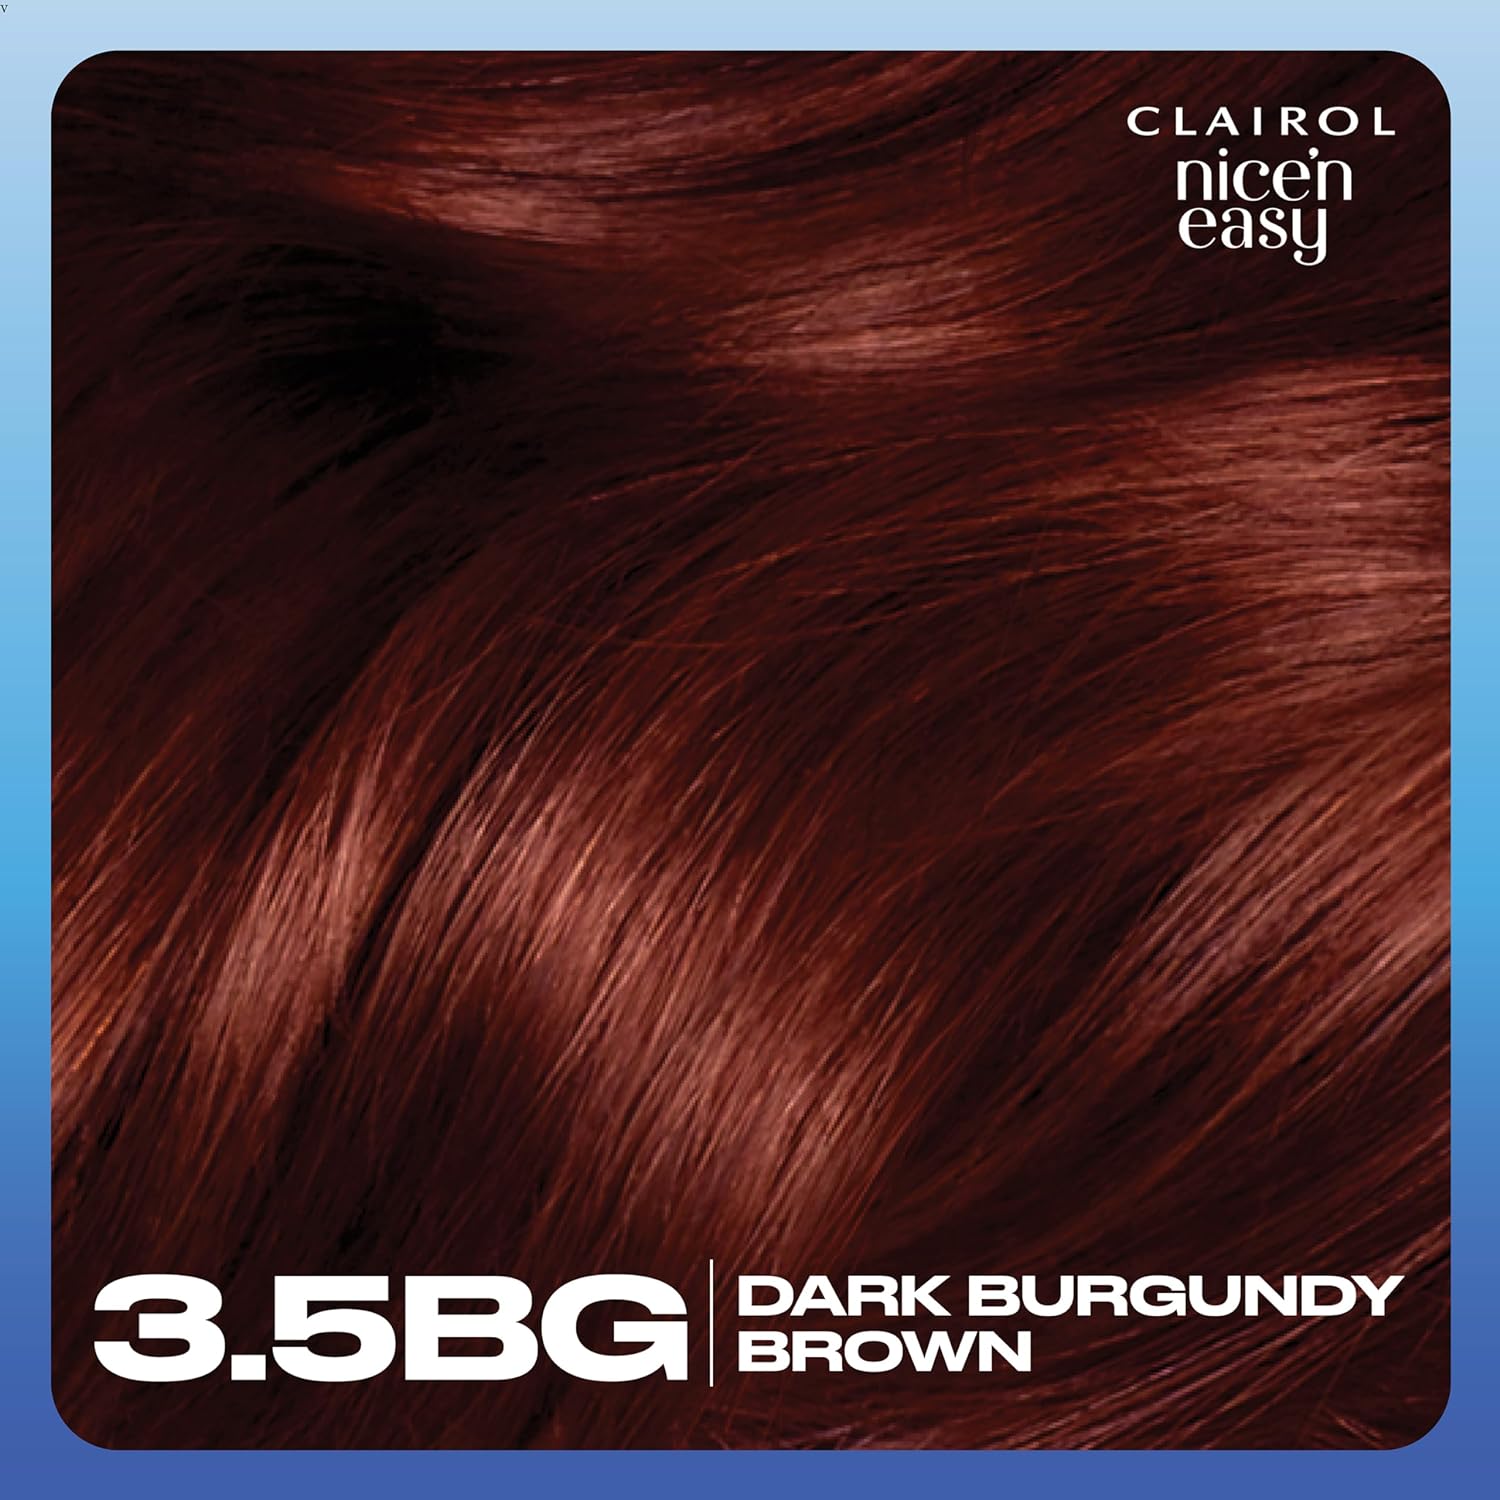 Clairol Nice'n Easy Crème, Permanent Hair Dye, 3.5BG Dark Burgundy Brown